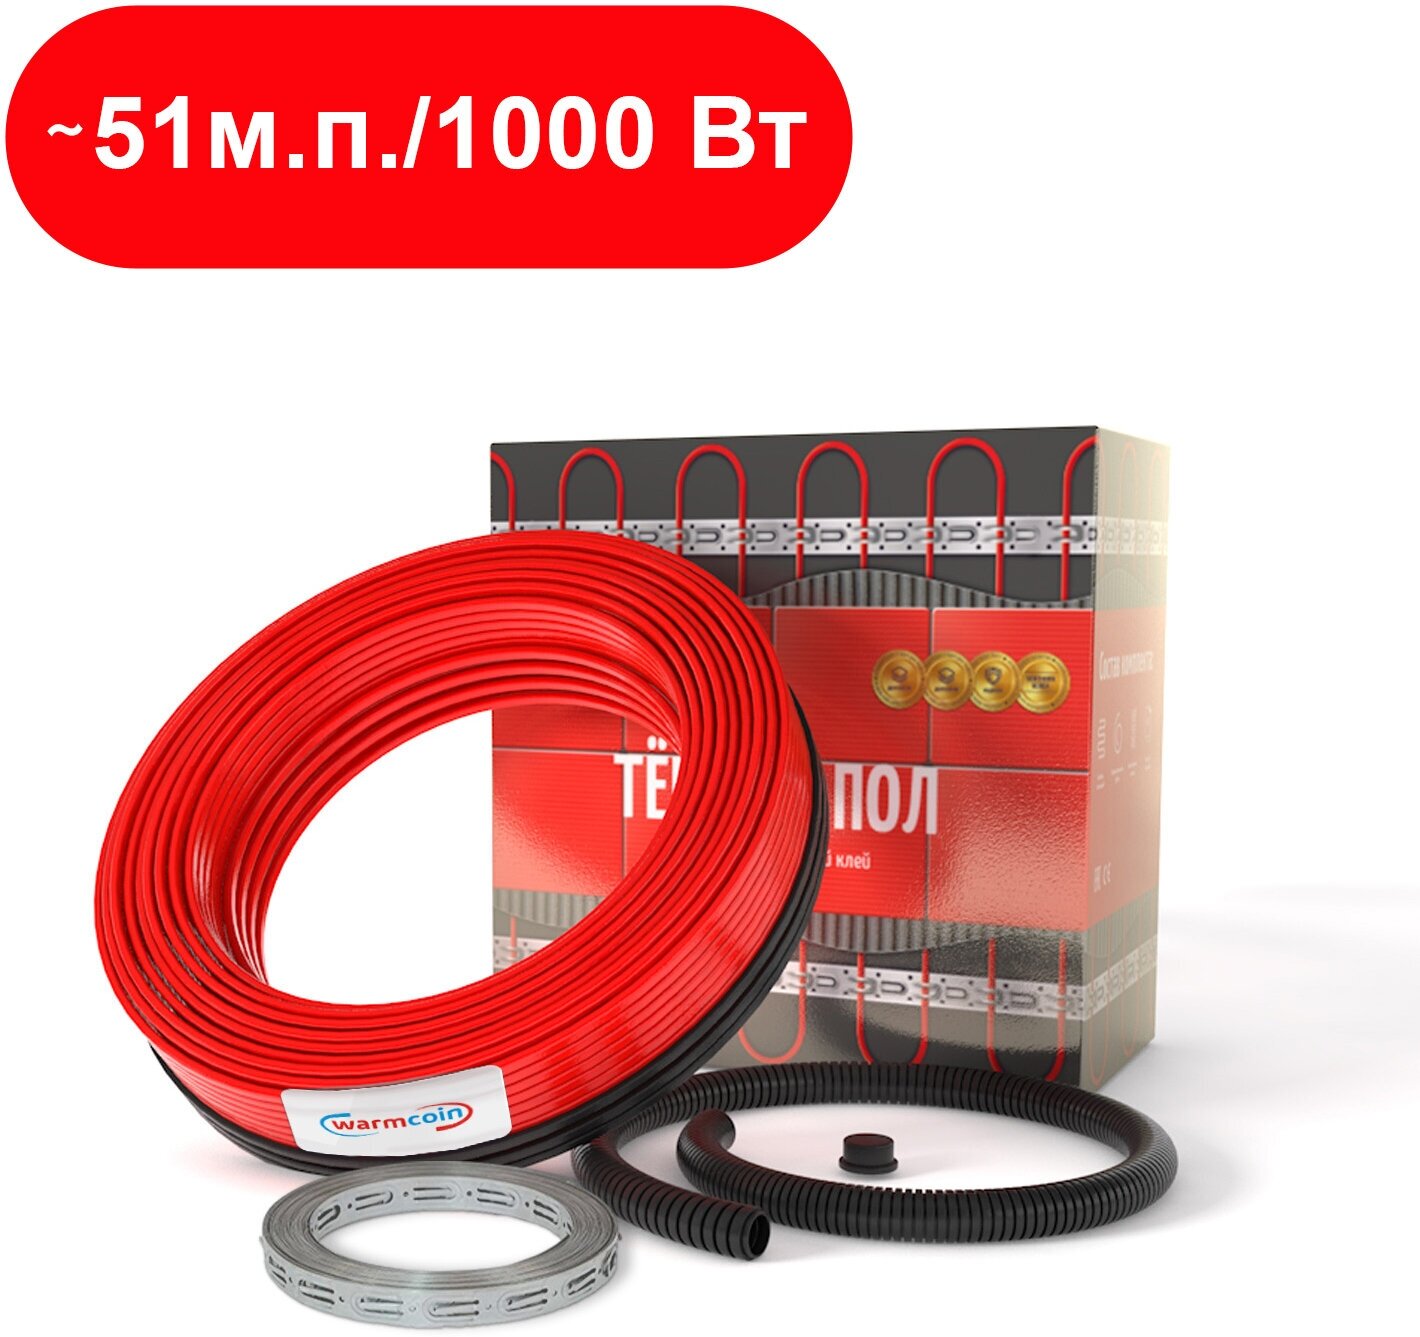 Теплый пол кабель Warmcoin POWER 1000 Вт / ~51 м